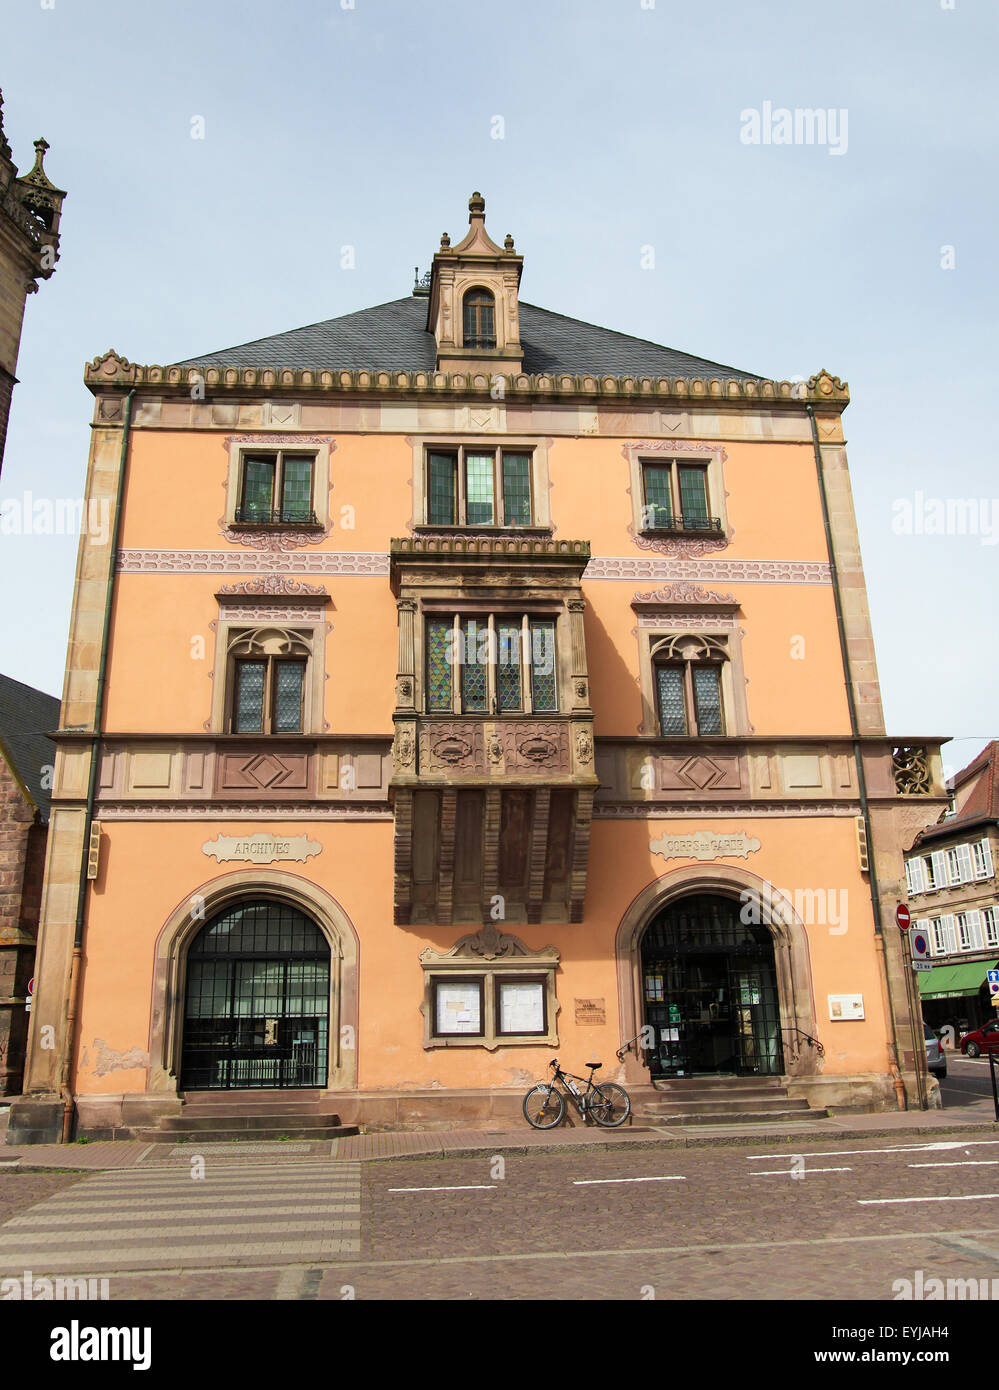 OBERNAI, Frankreich - 11. Mai 2015: Rathaus am Marktplatz von Obernai, Elsass, Frankreich Stockfoto